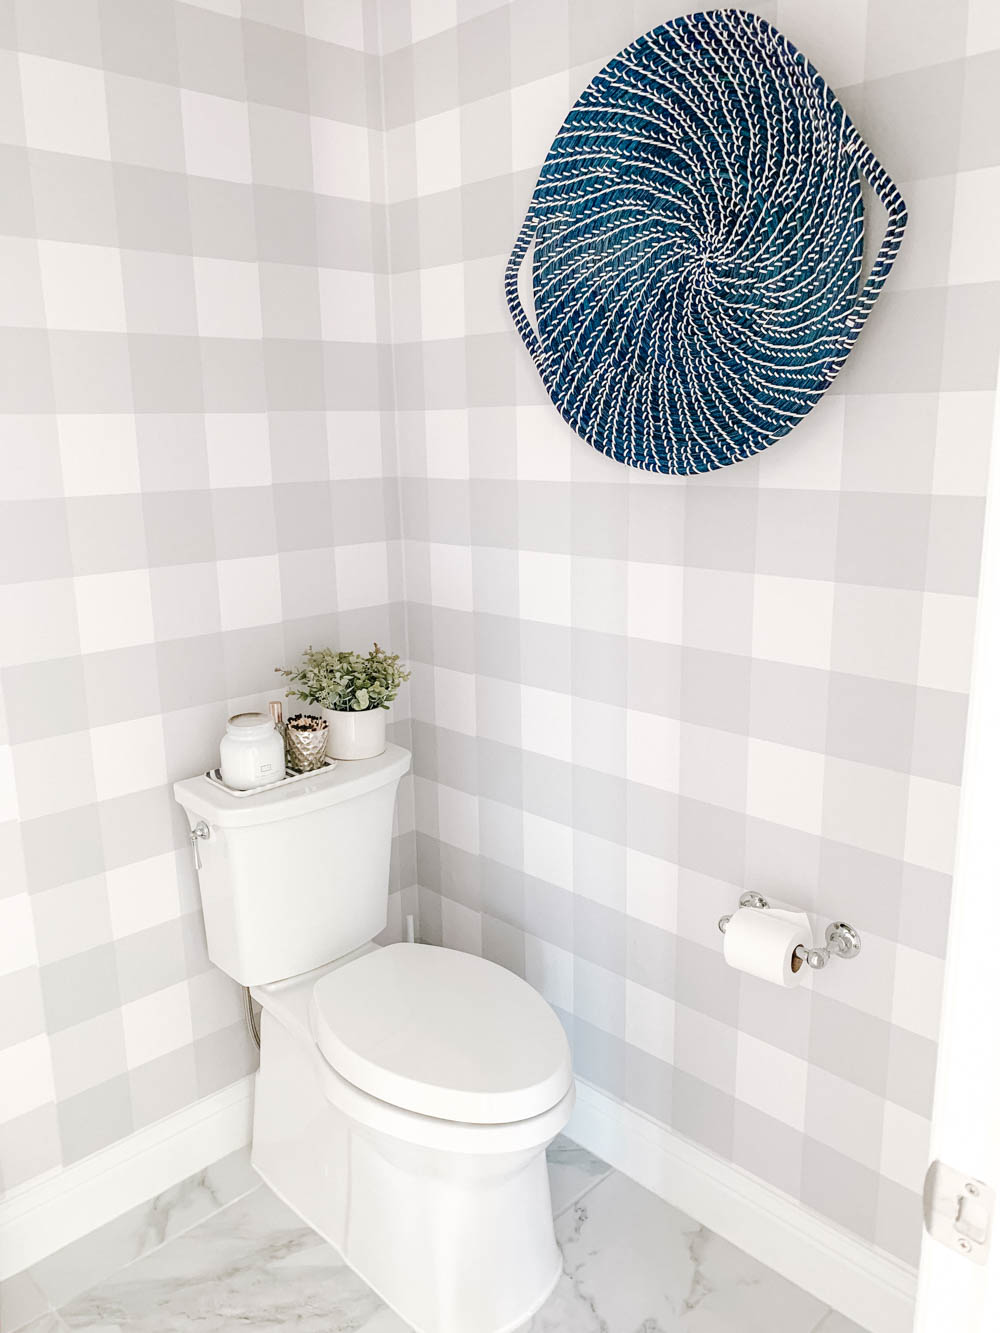 Blue and white basket for wall decor mixed with grey and white buffalo check wallpaper. #ABlissfulNest #bathroom #bathroomdesign #farmhousedecor